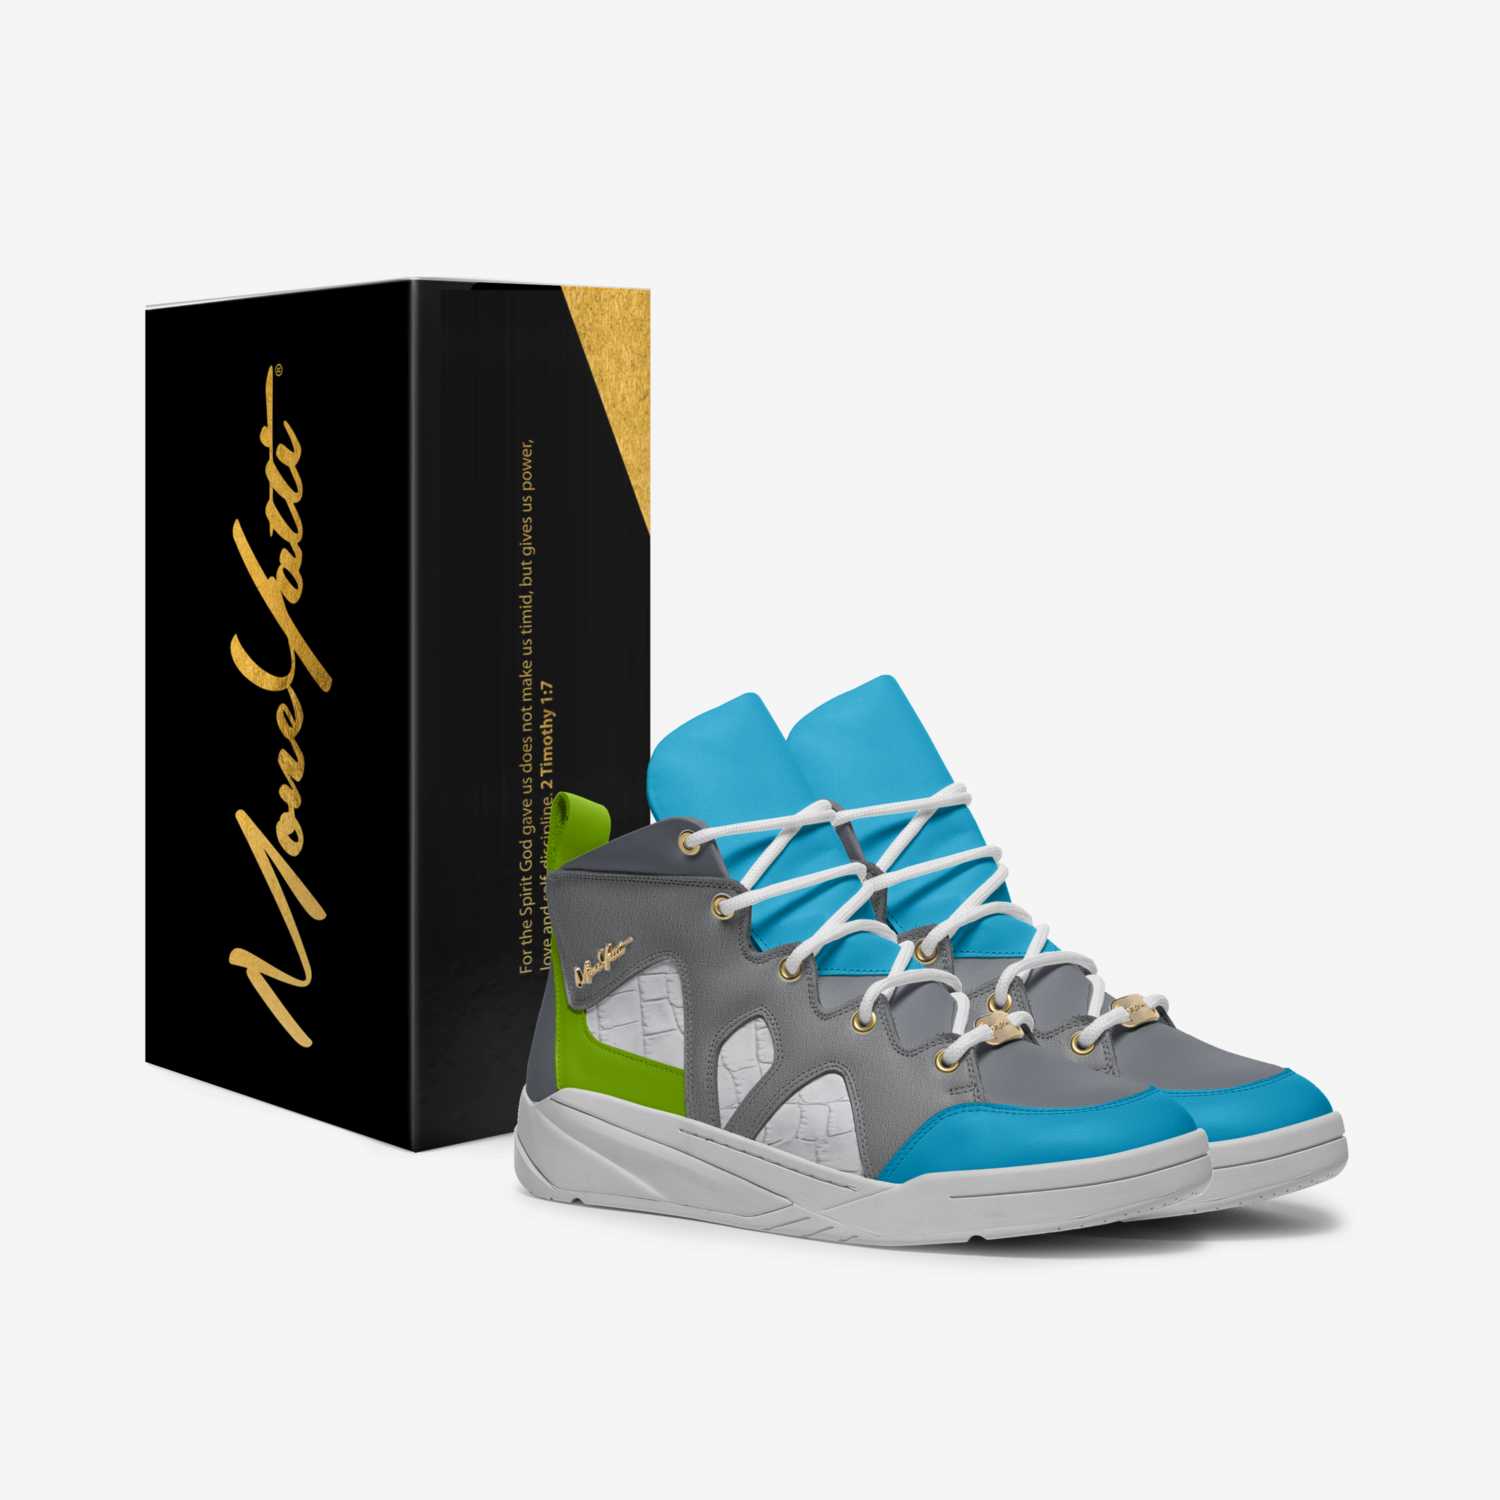 MONEYATTI TAKEOFF 006 custom made in Italy shoes by Moneyatti Brand | Box view